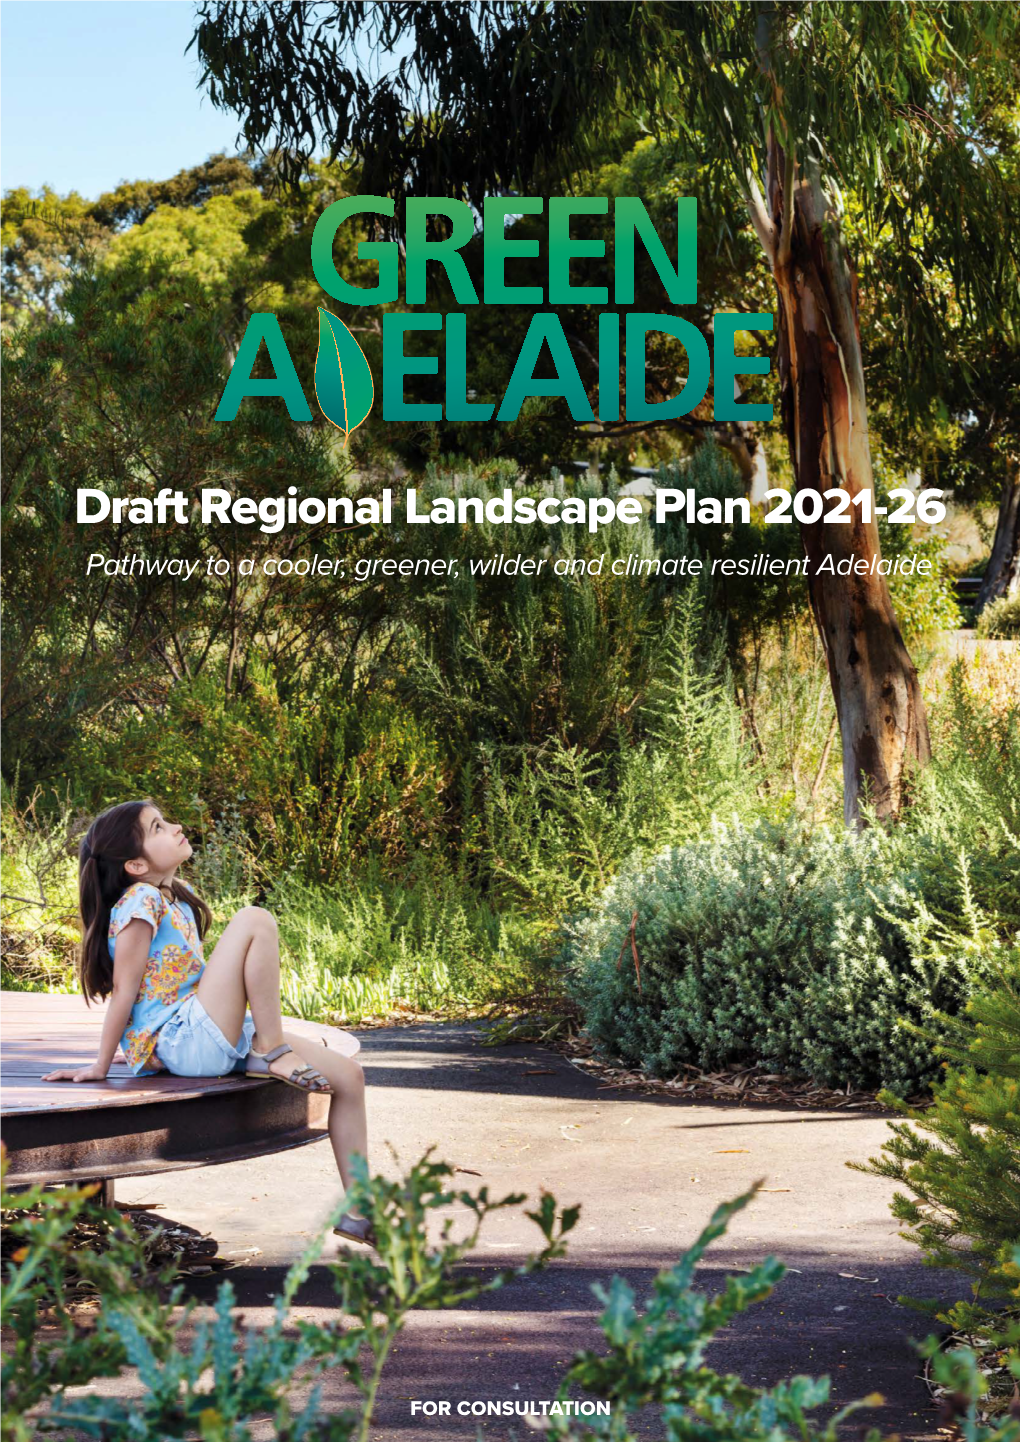 Green Adelaide Draft Regional Landscape Plan